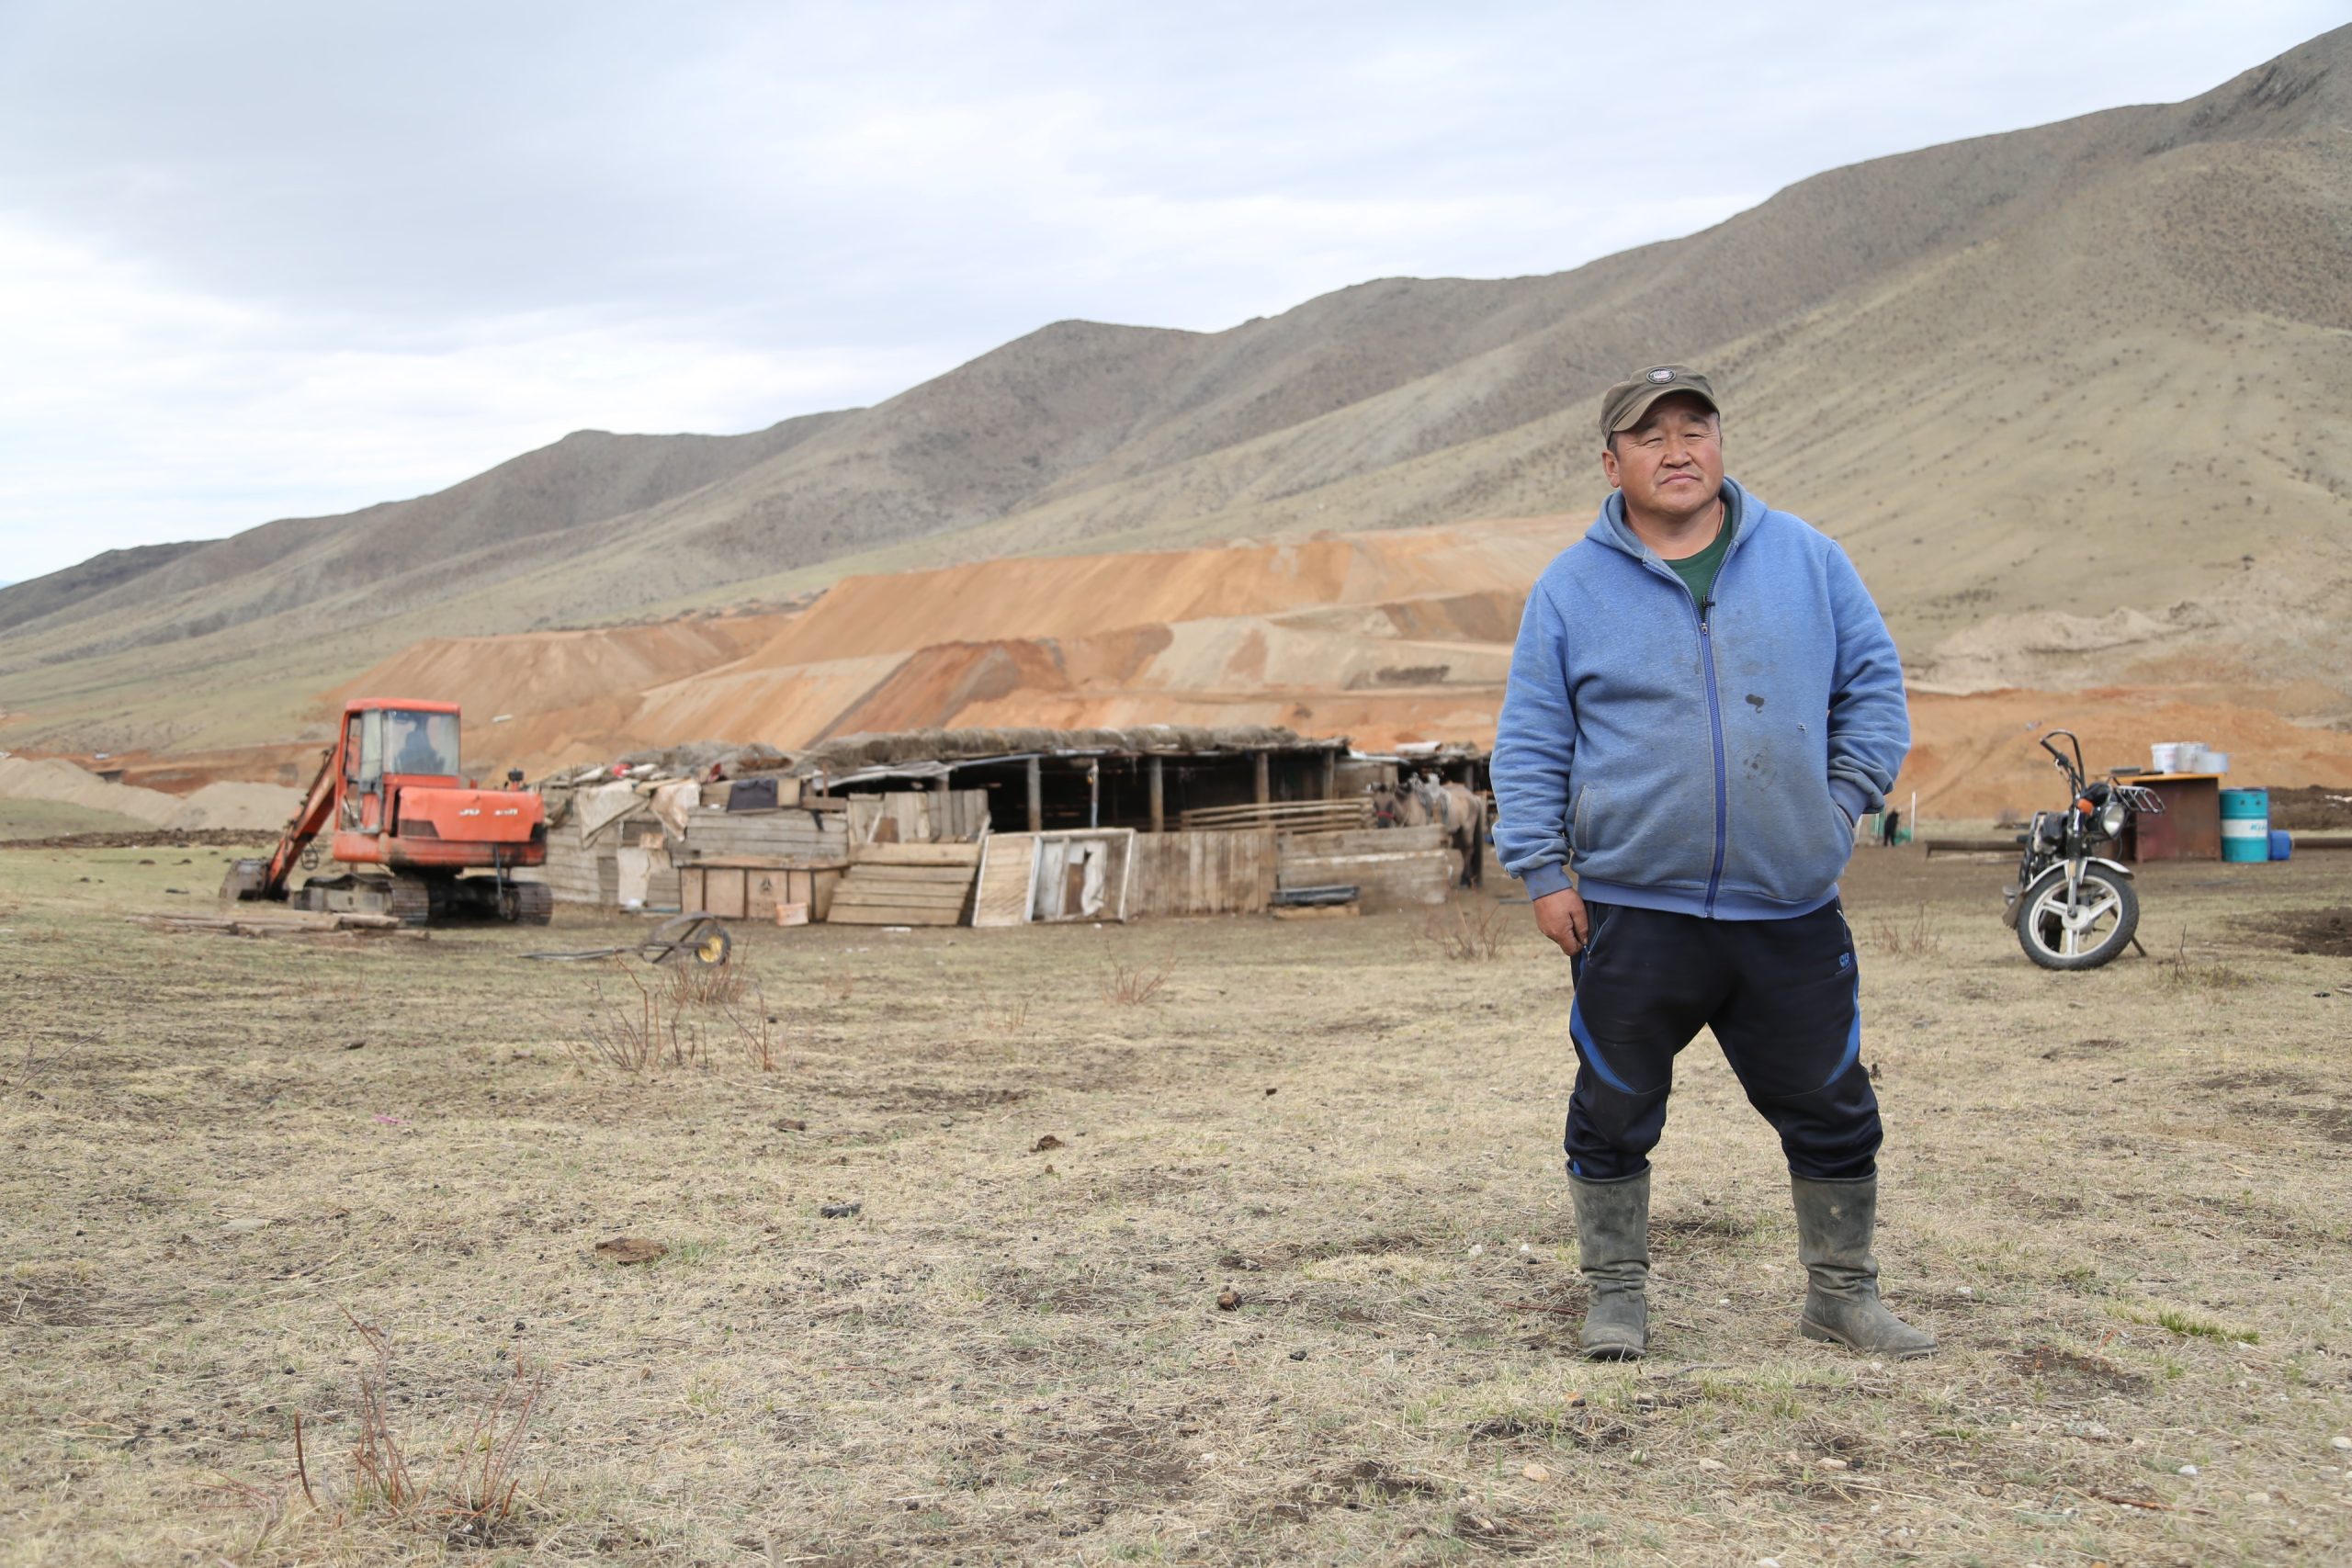 TAI’s Work in Mongolia to help mining communities bears fruit